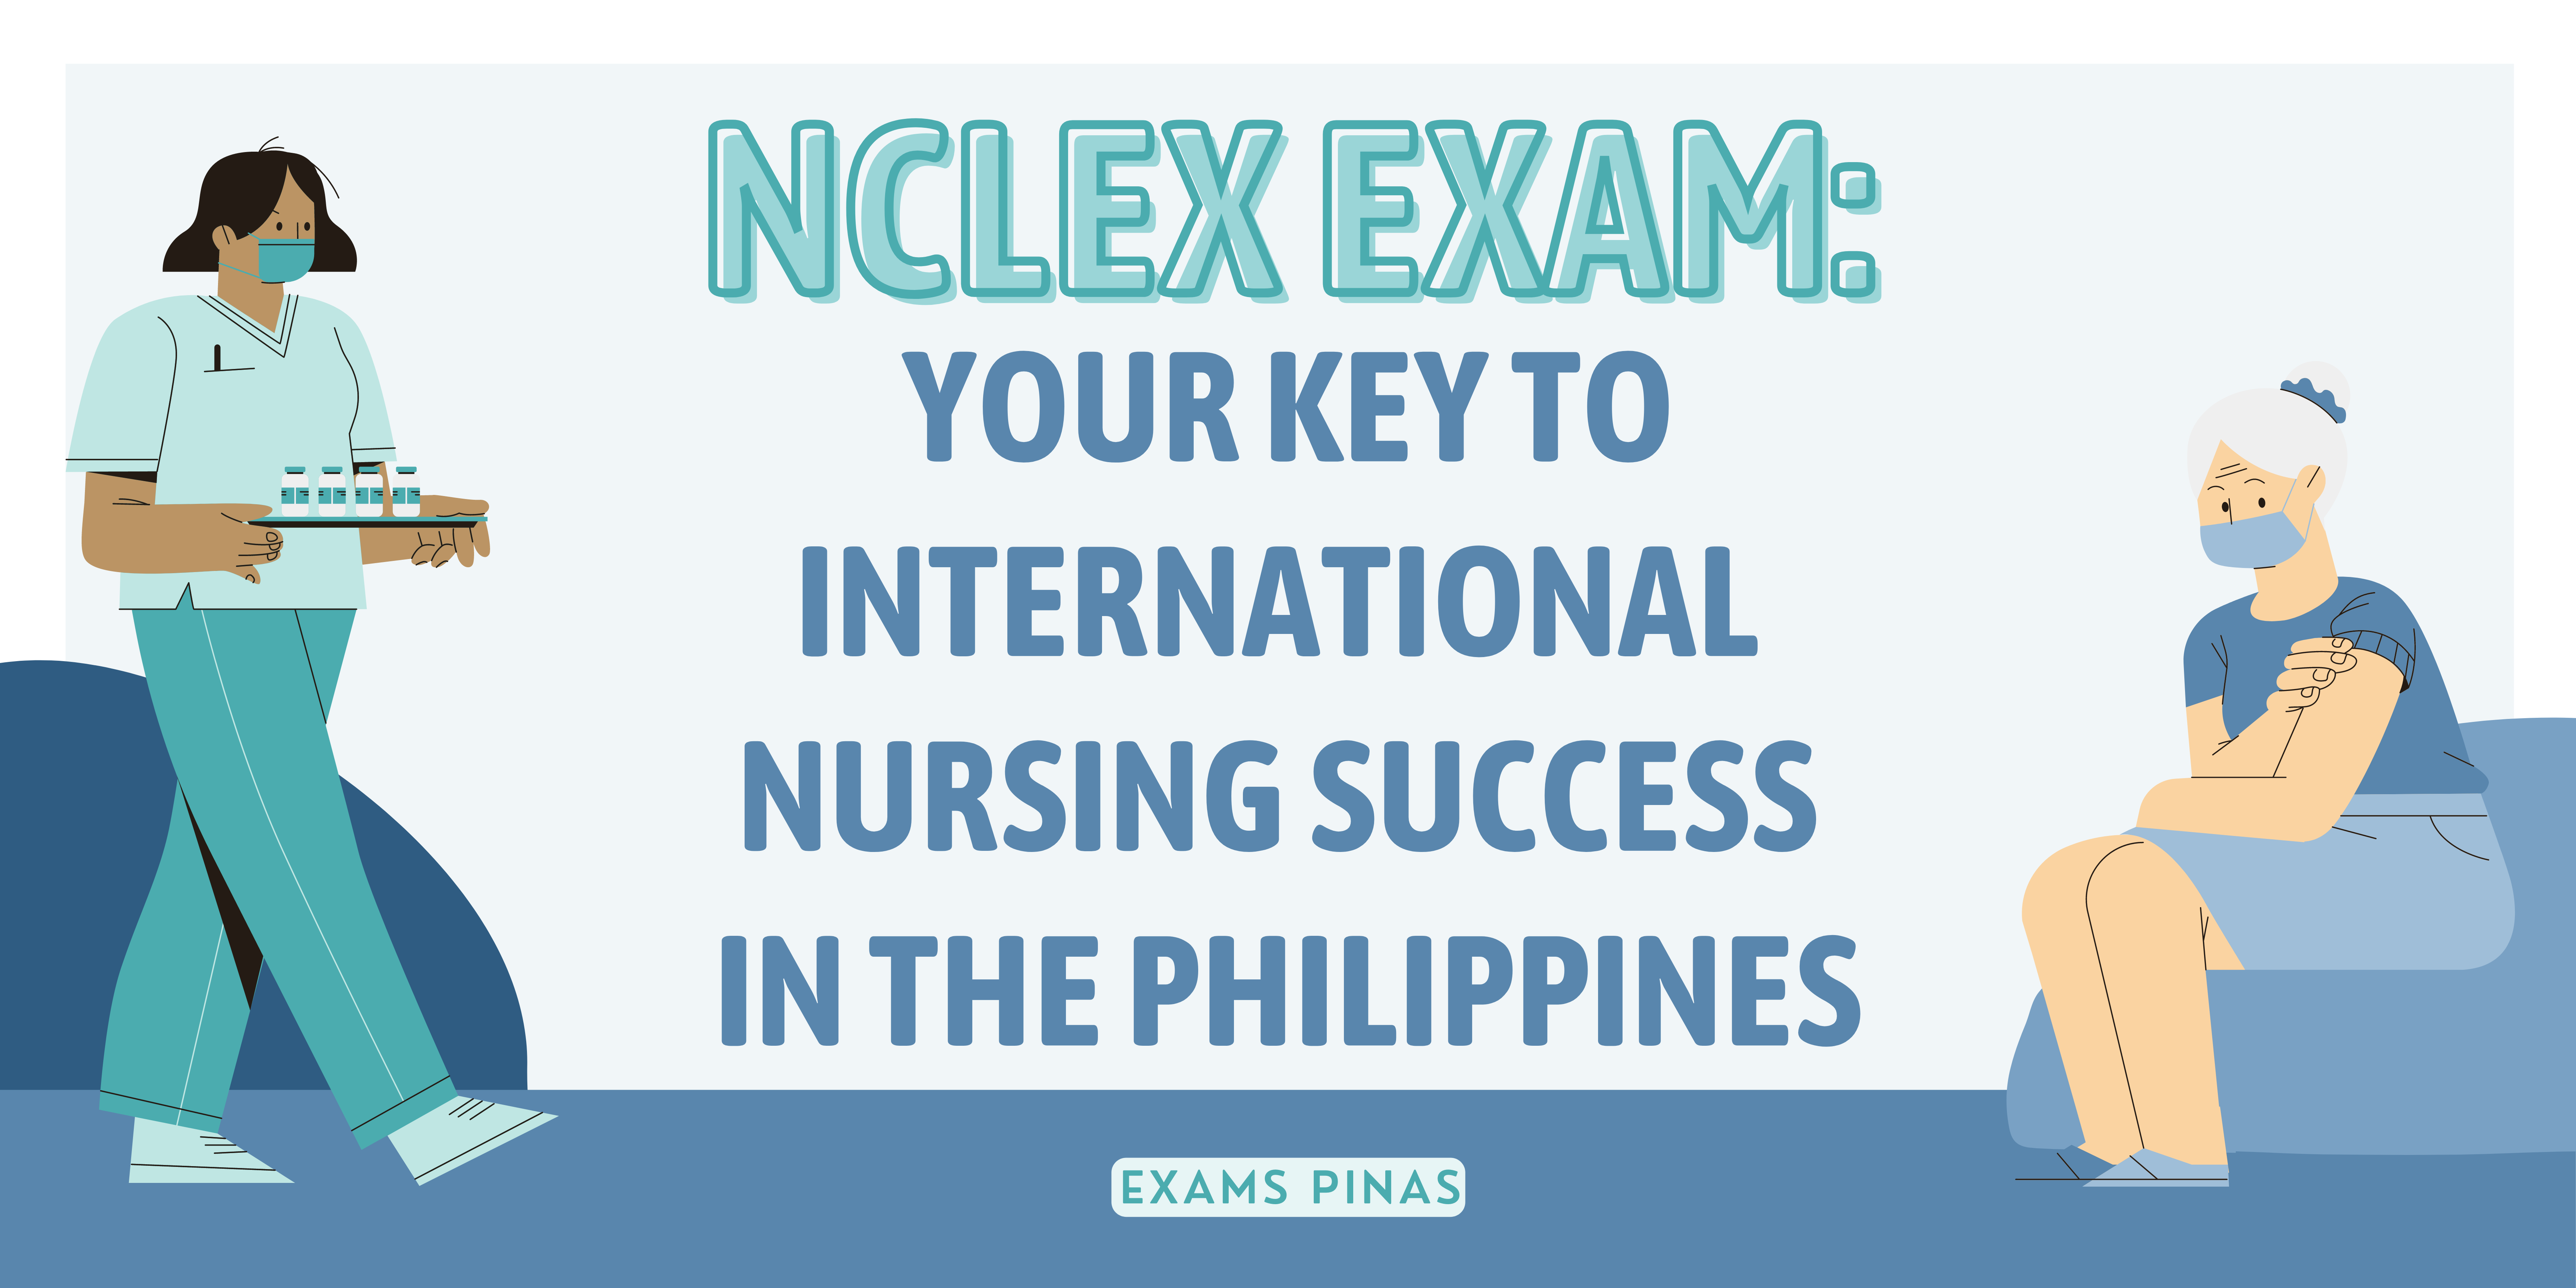 NCLEX Exam Your Key to International Nursing Success in the